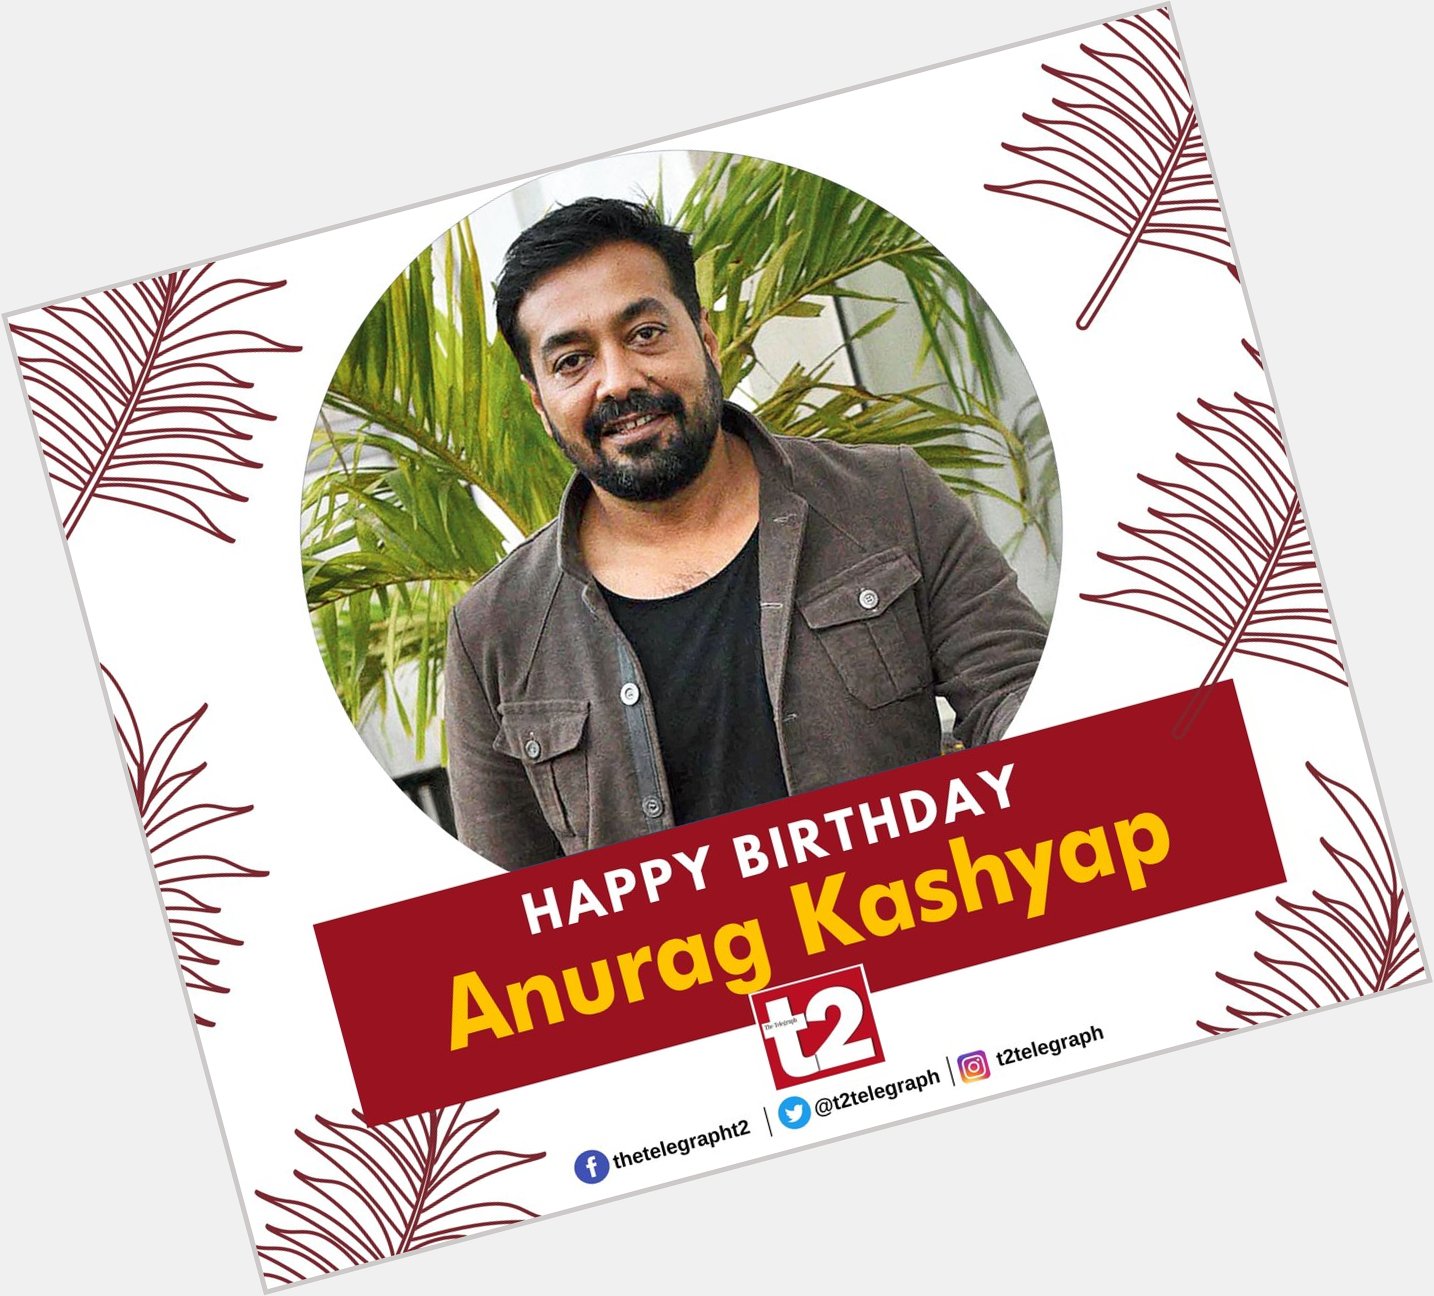 T2 wishes maverick movie man Anurag Kashyap a very happy birthday! 